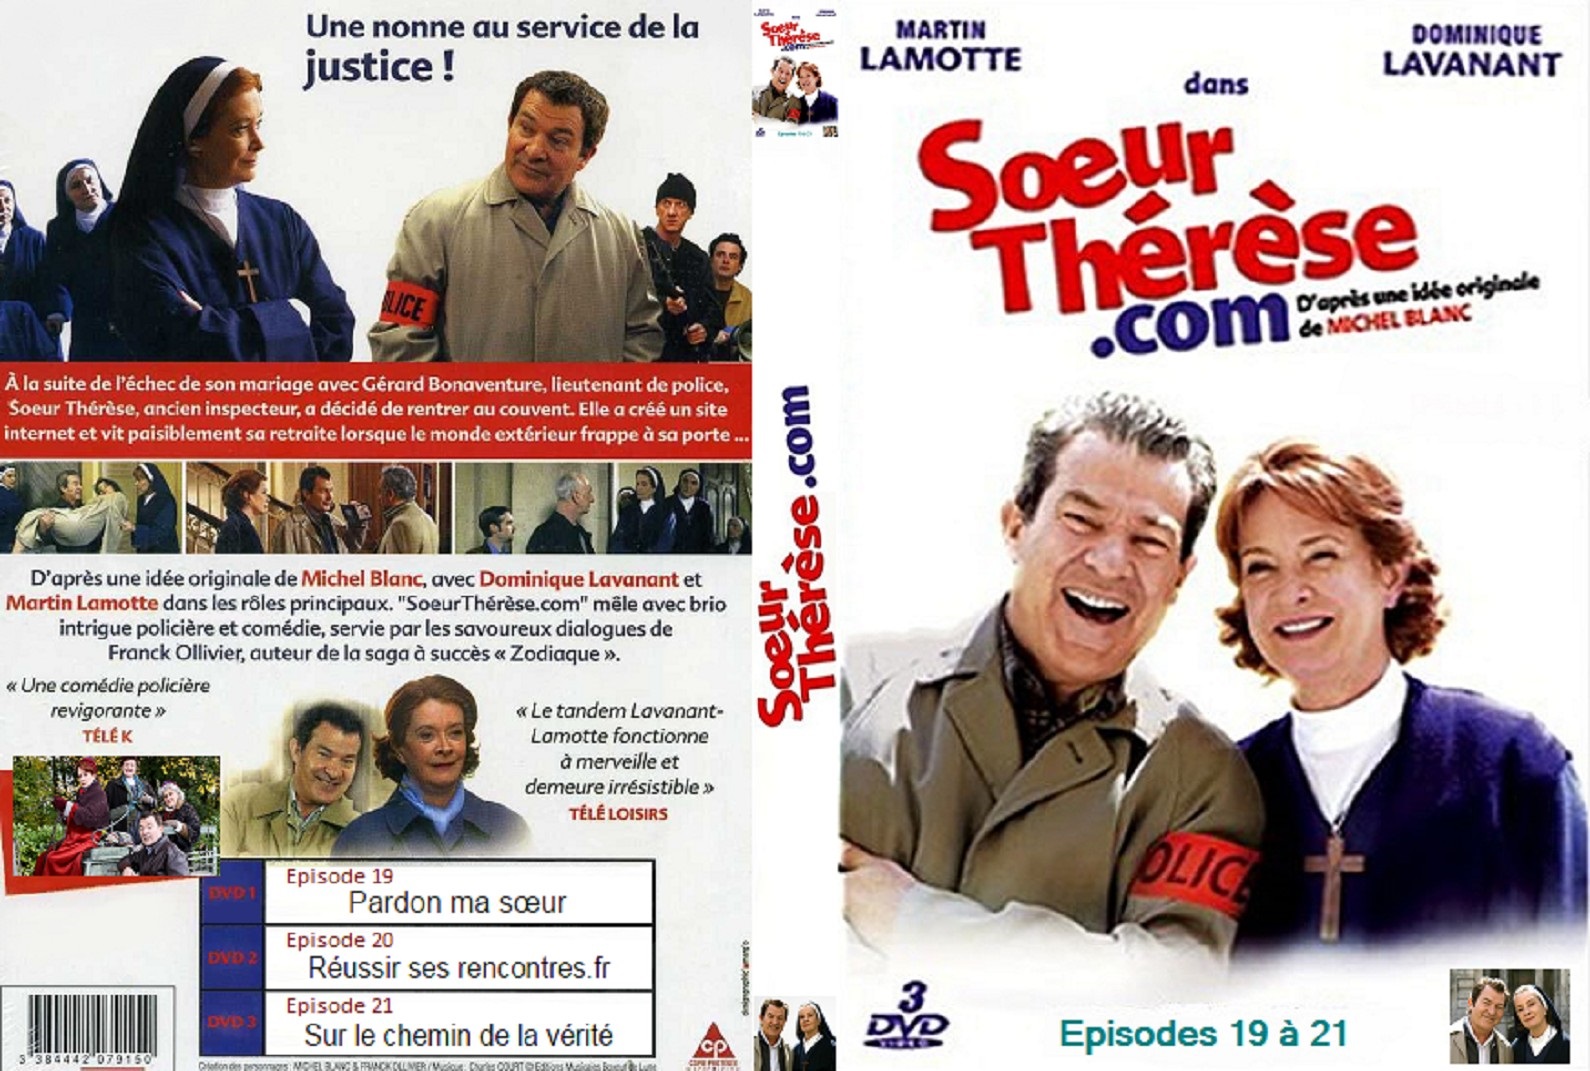 Jaquette DVD Soeur Threse com Ep 19-21 custom